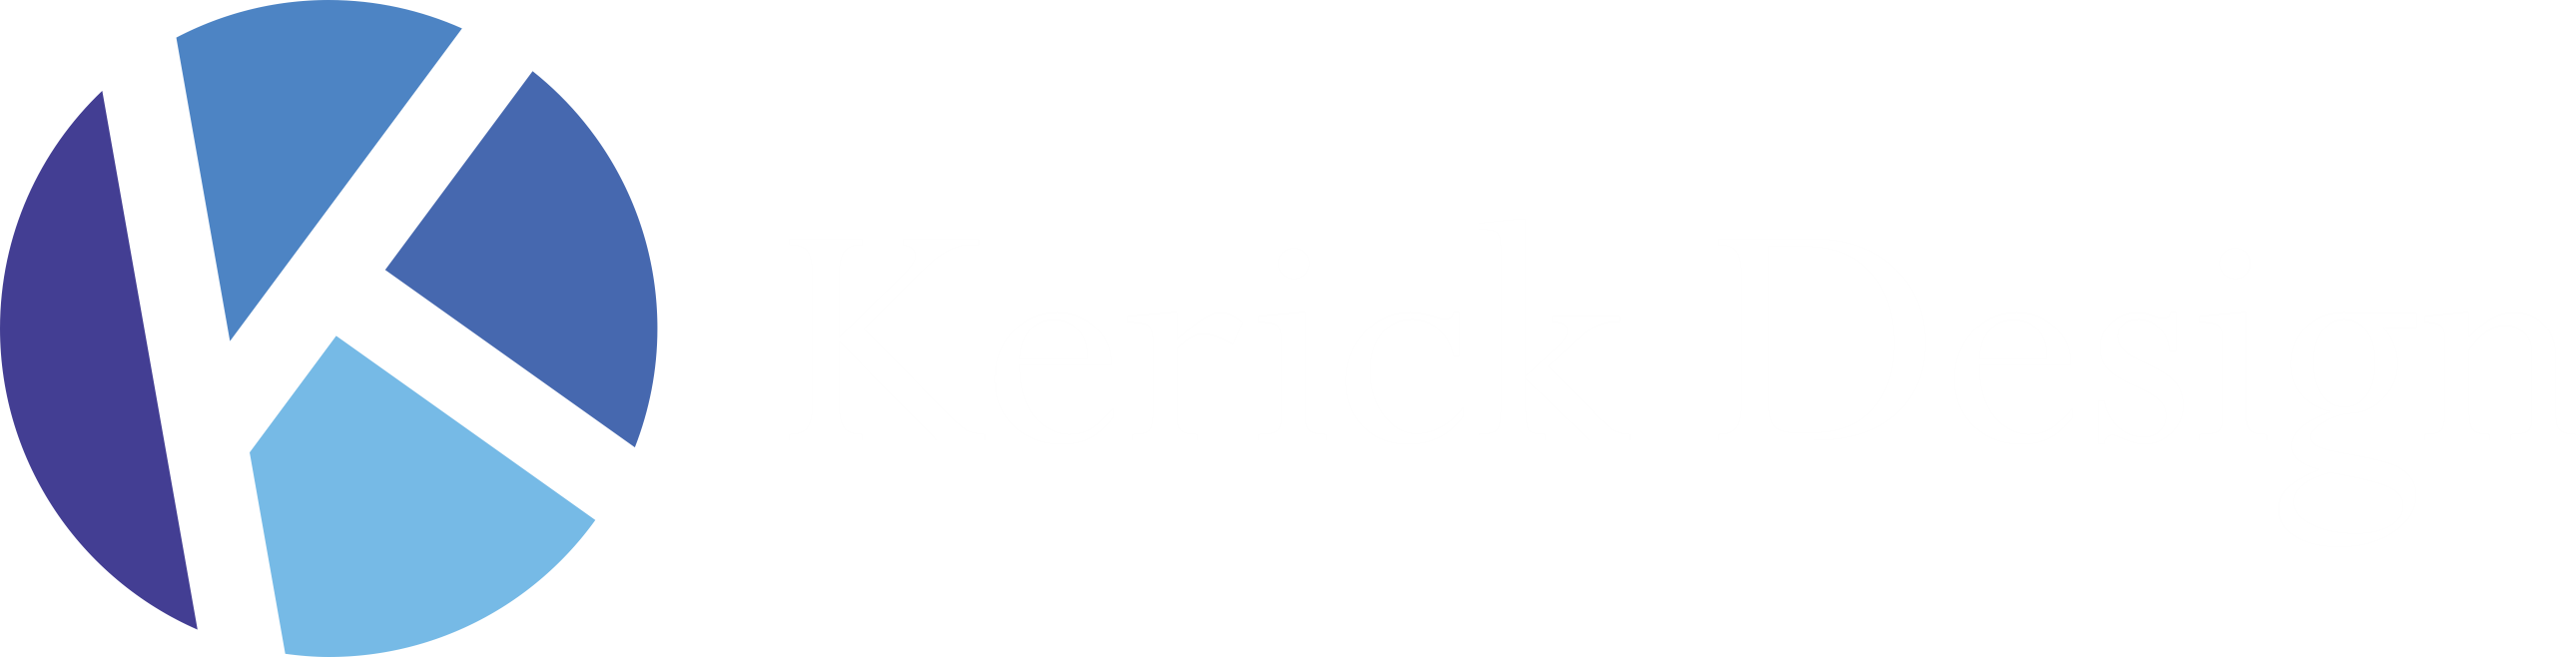 Kerick Design